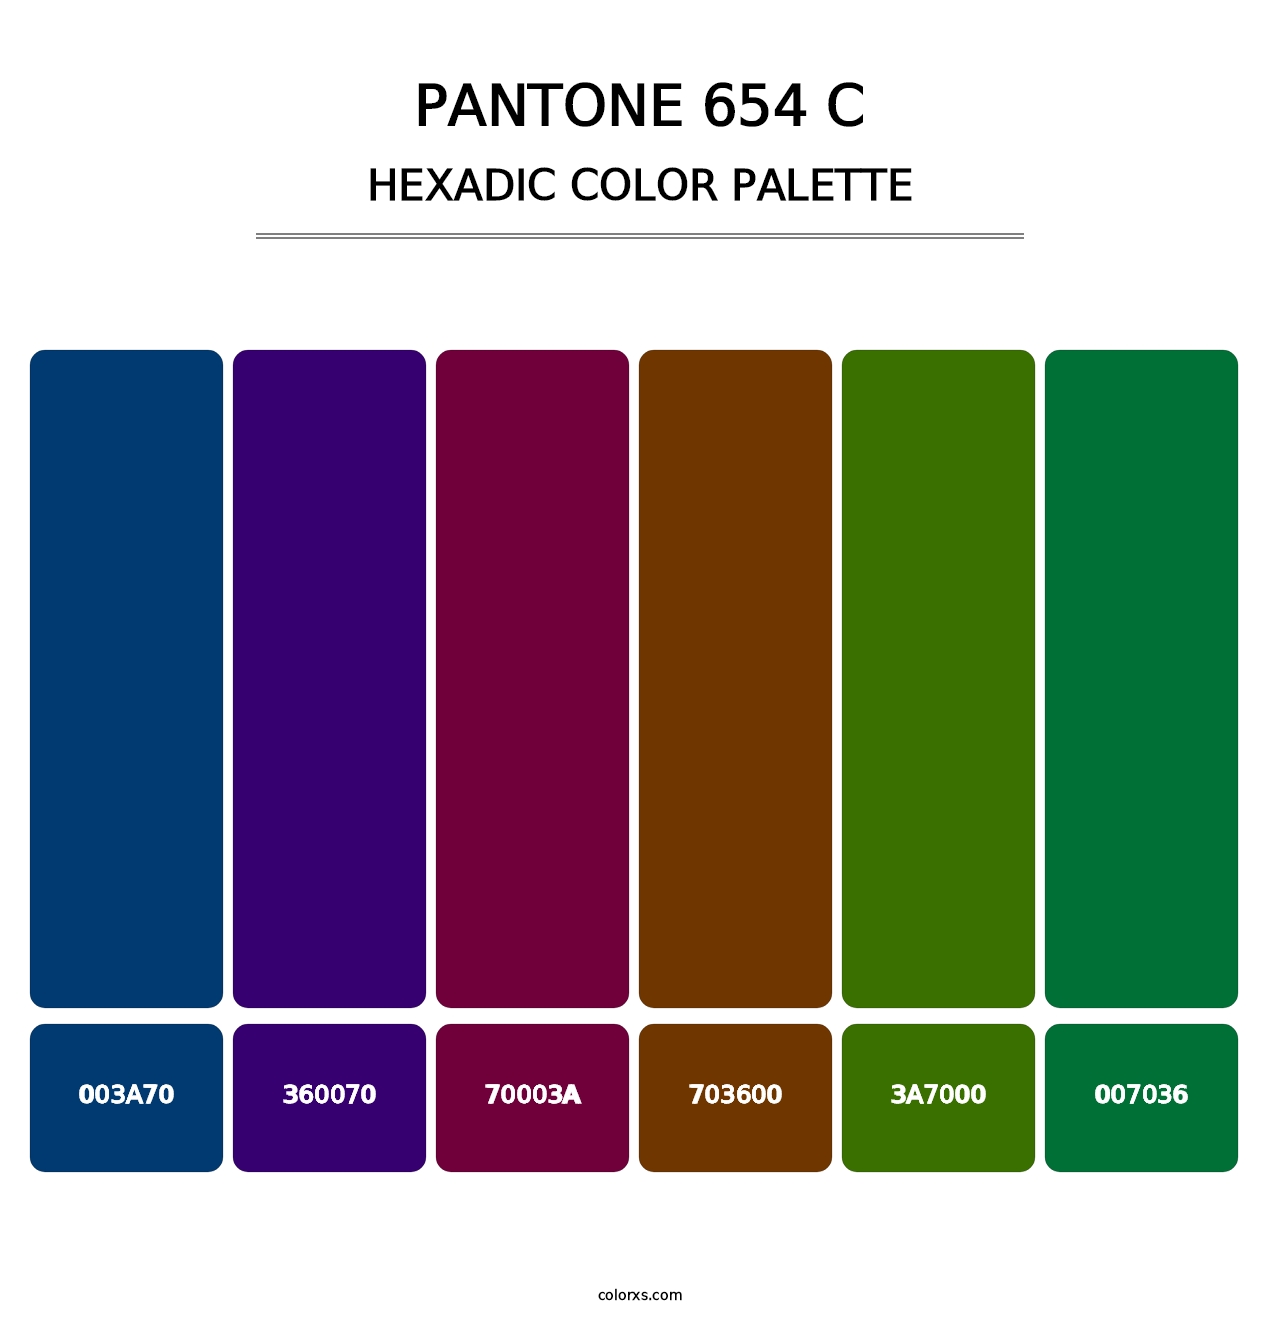 PANTONE 654 C - Hexadic Color Palette